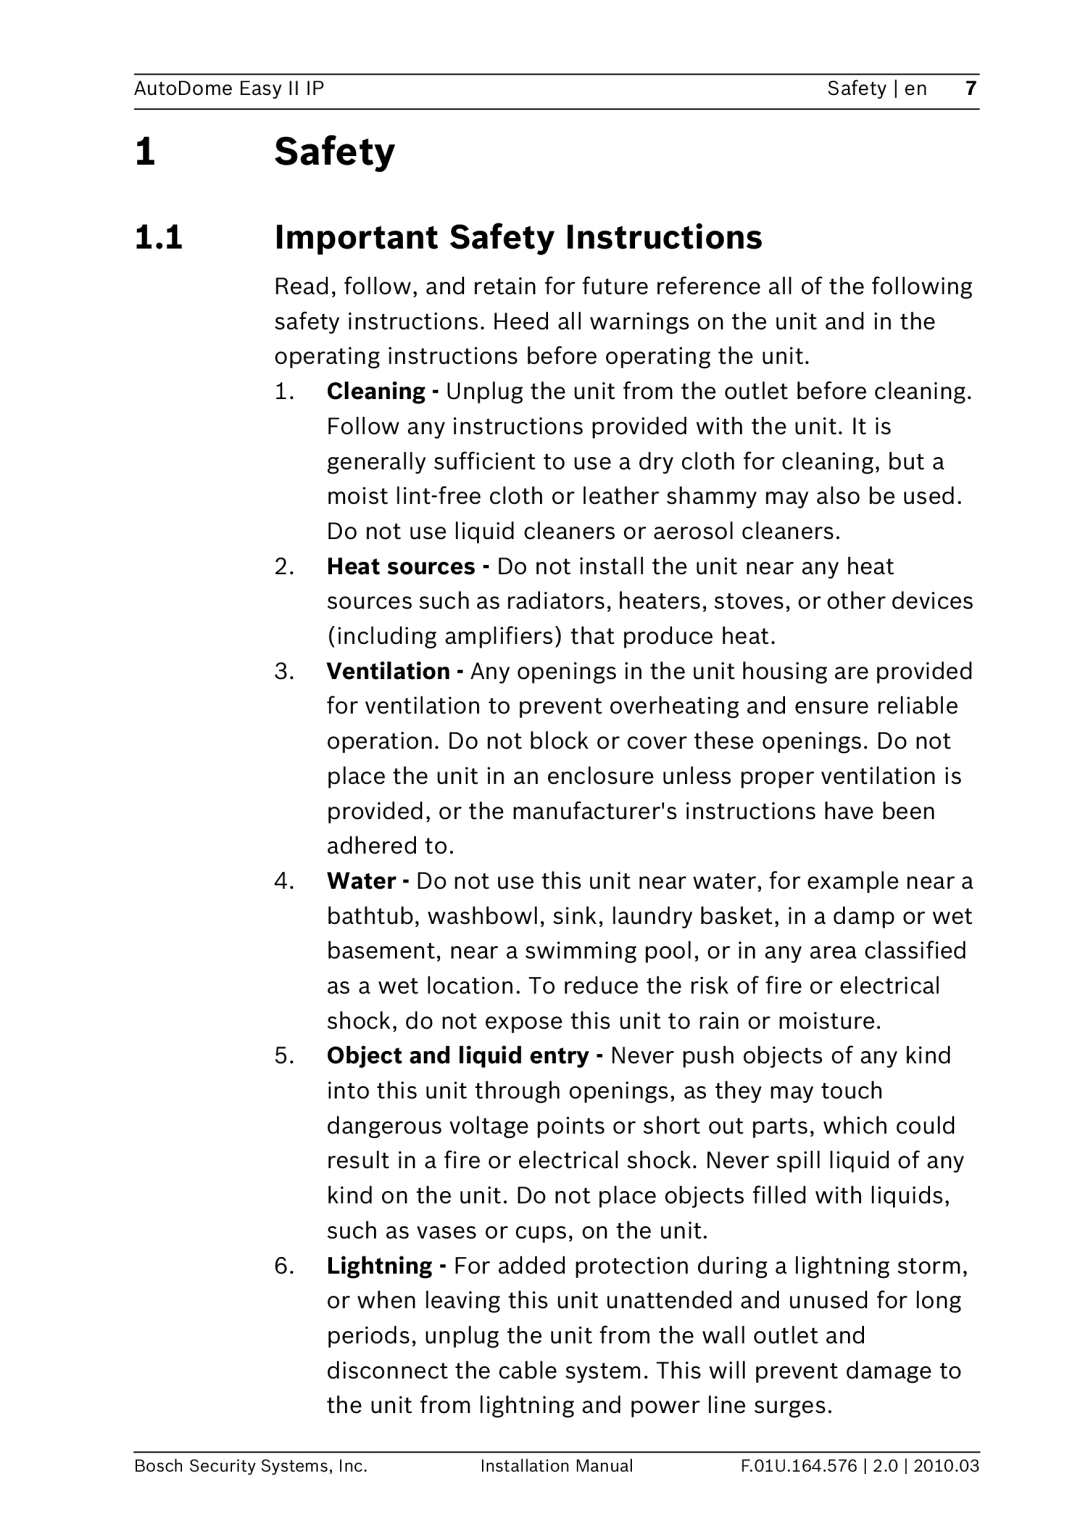 Bosch Appliances VEZ installation manual Important Safety Instructions 